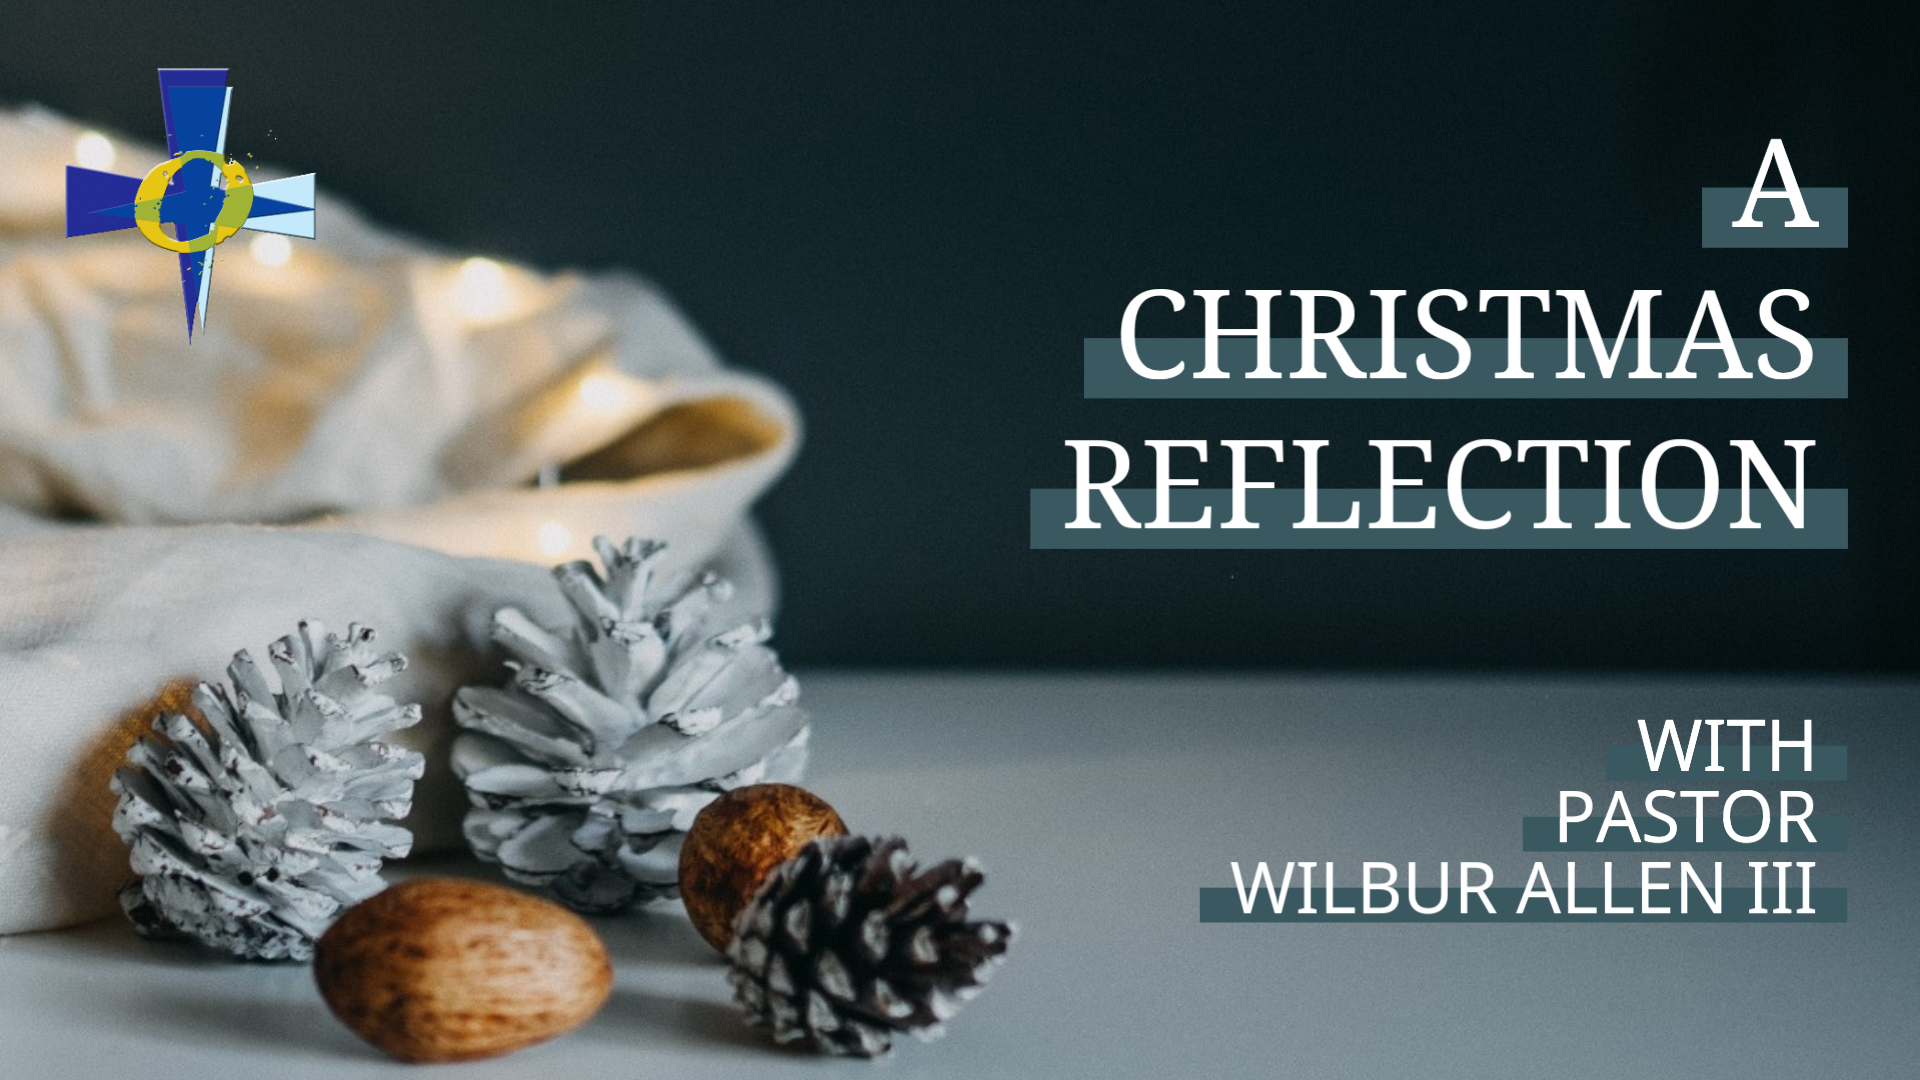 A Christmas Reflection